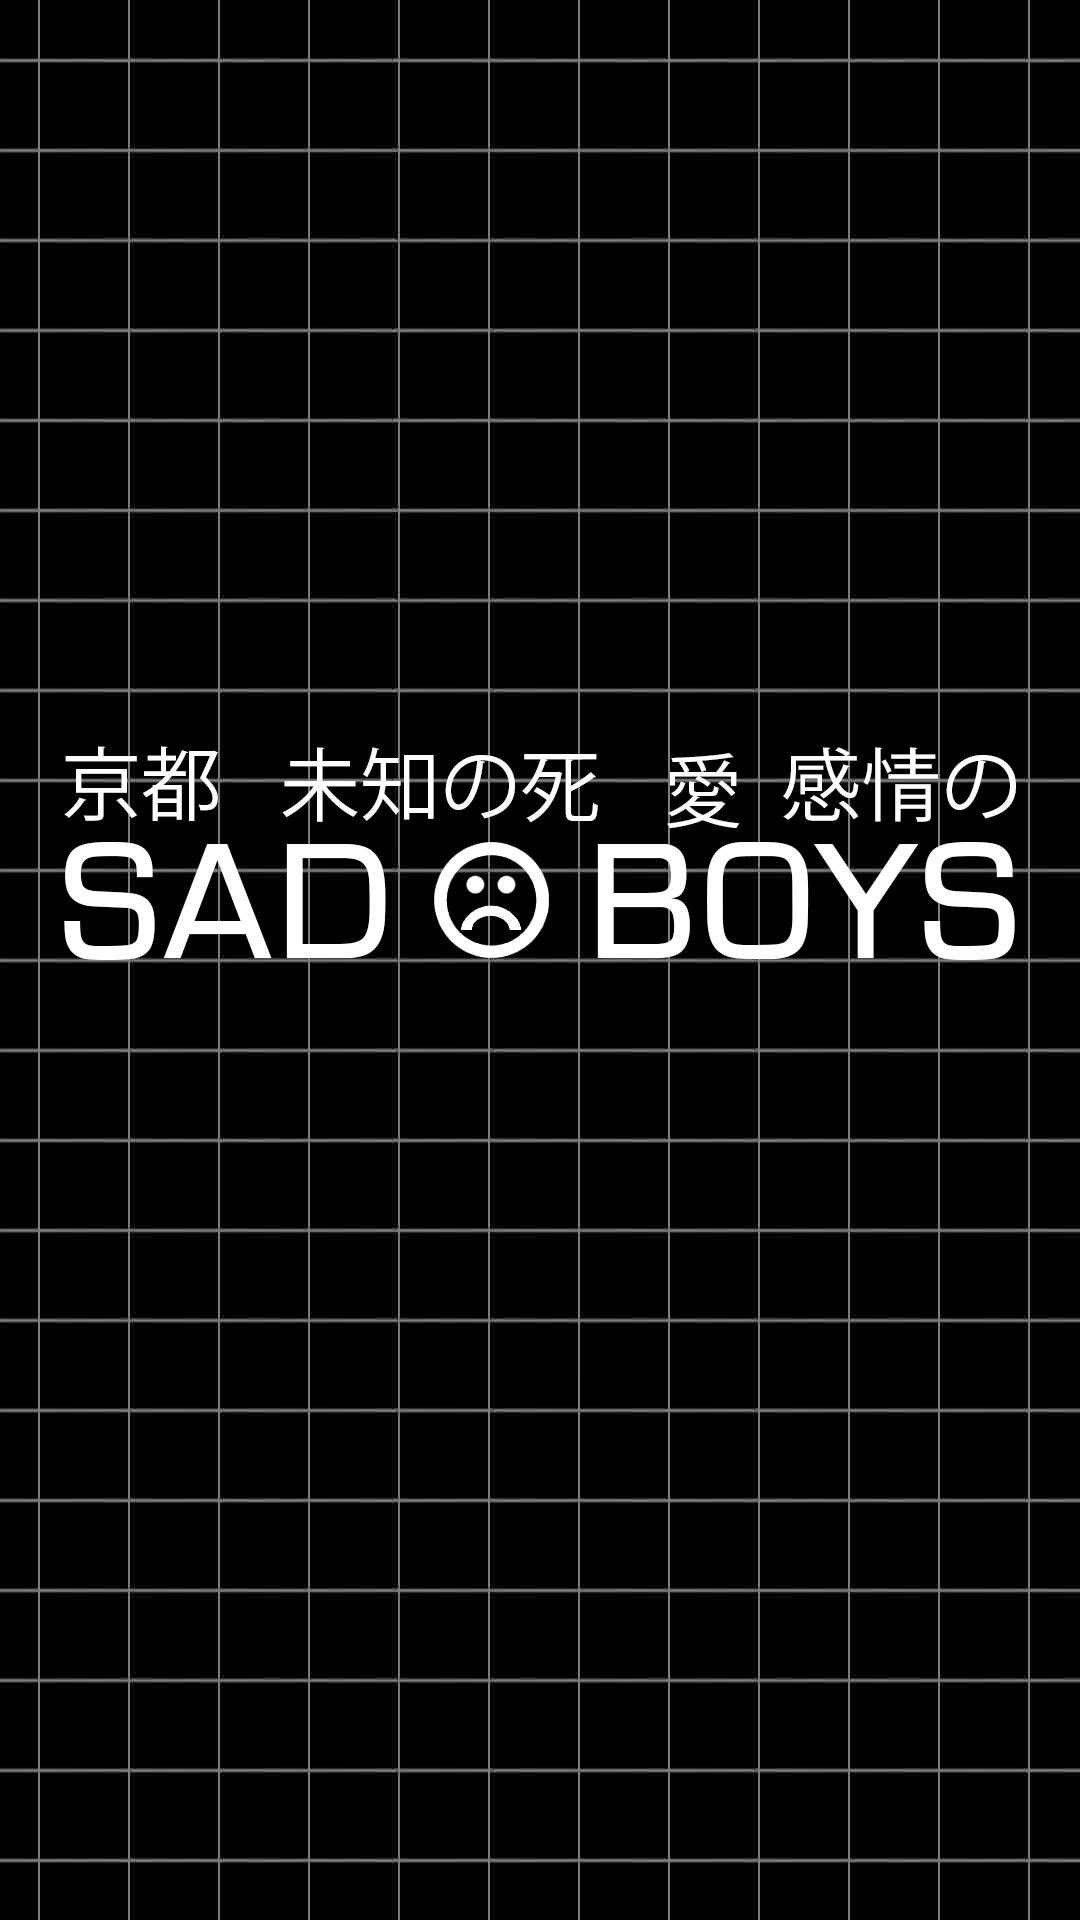 Sad Boys - A Black Background With The Words Sad Boys Wallpaper